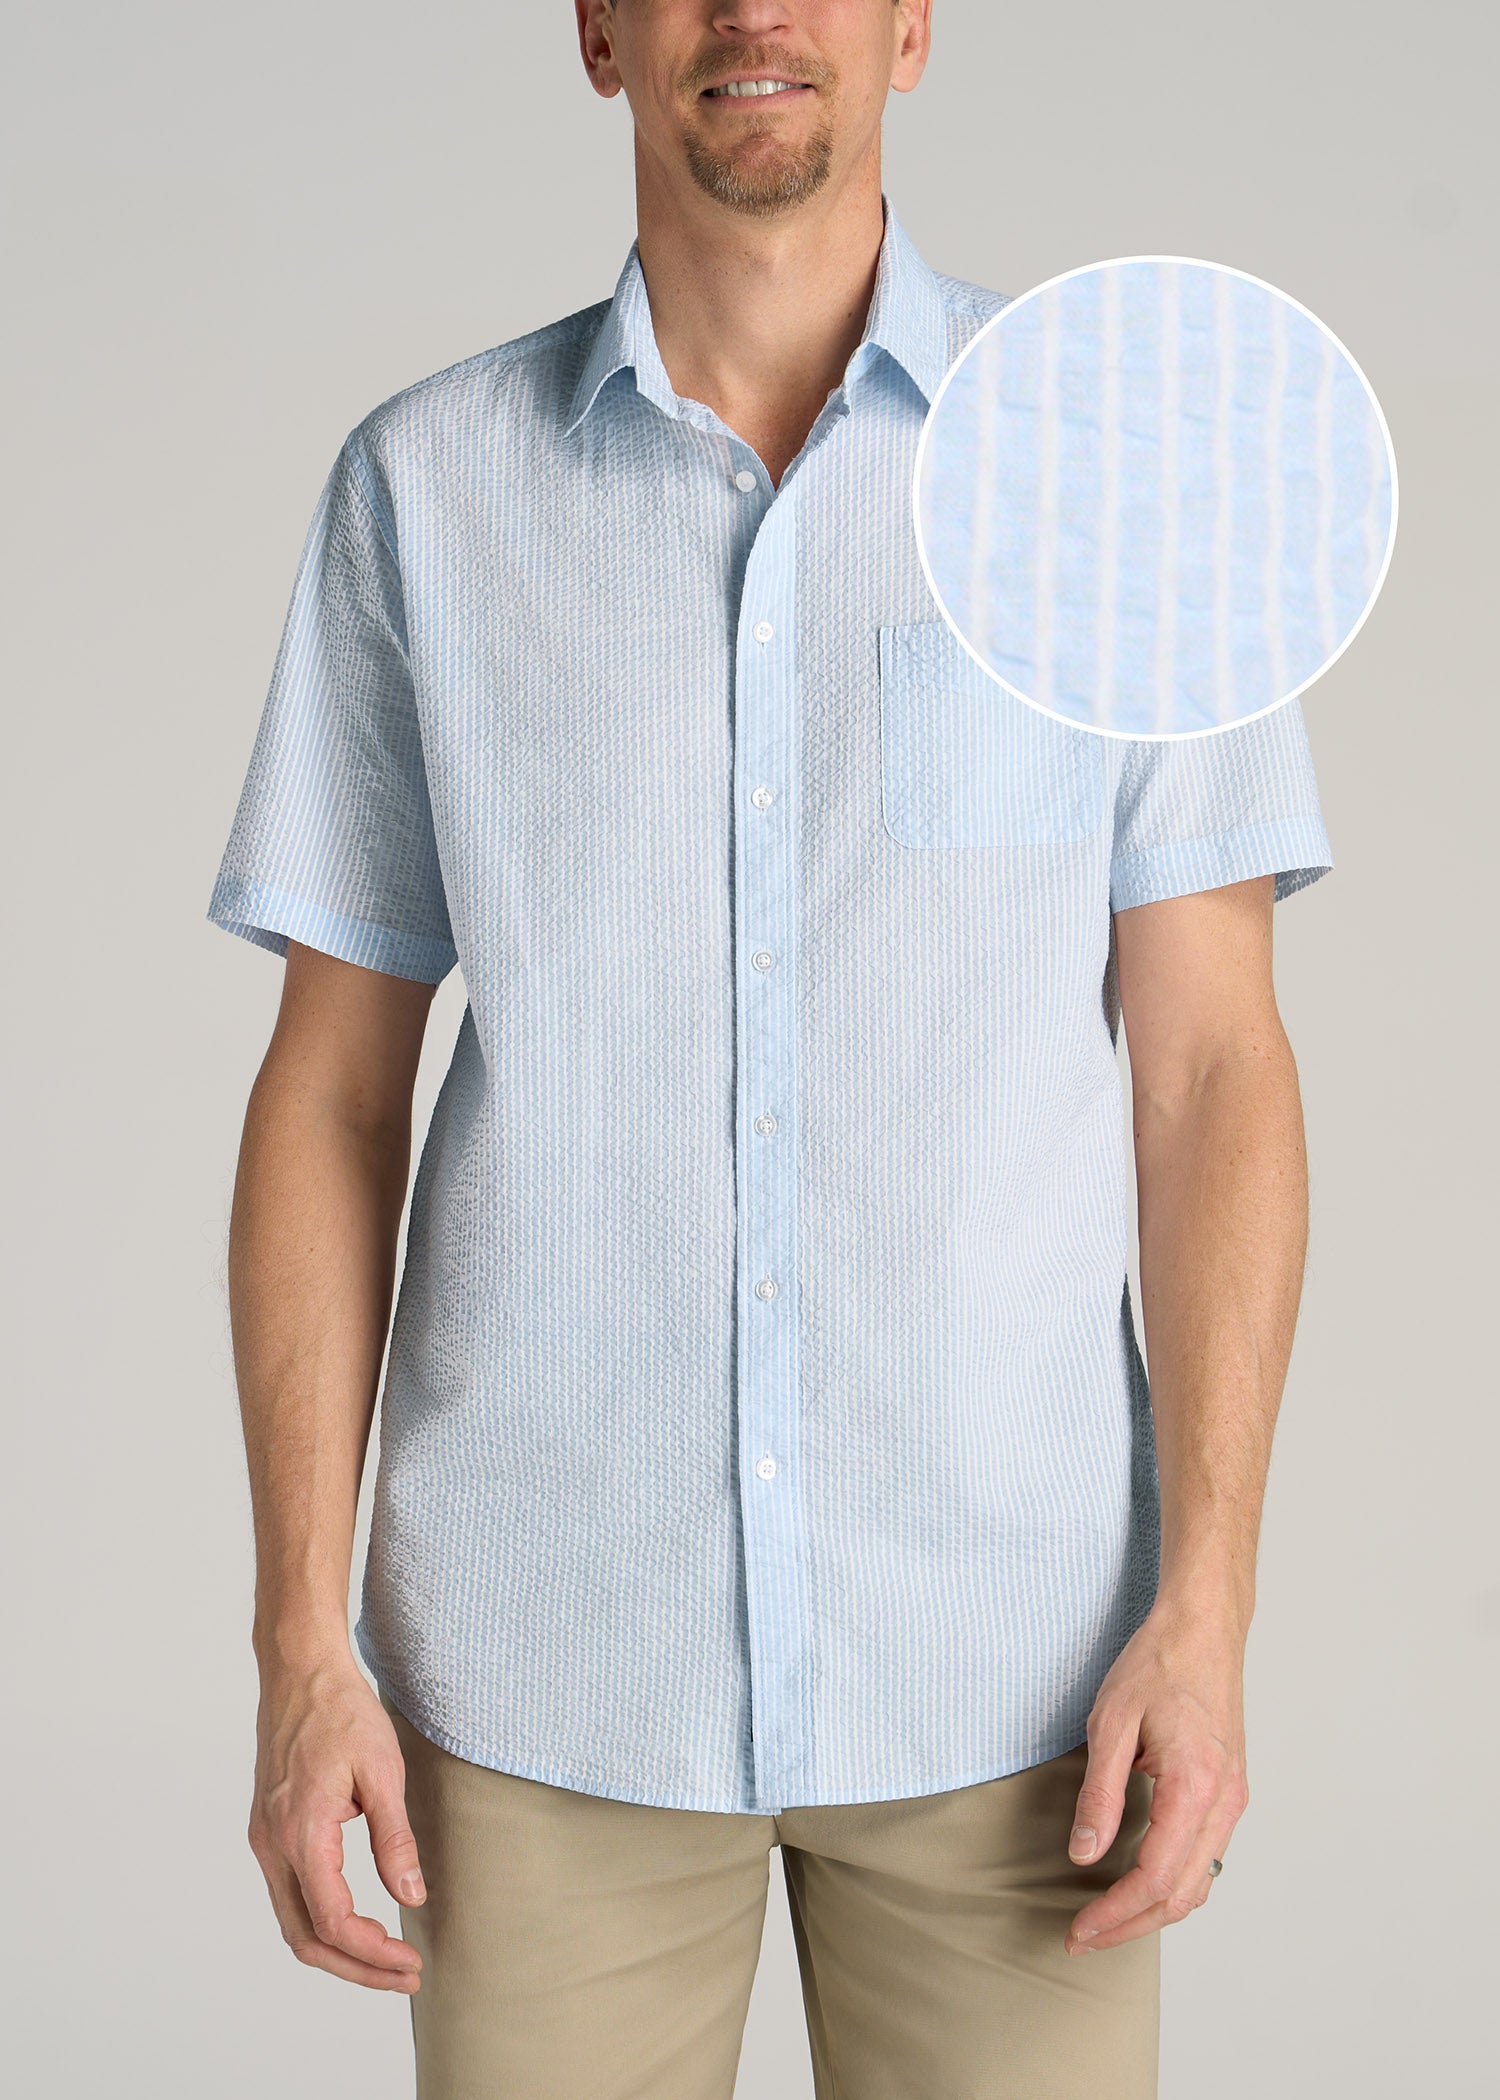 Seersucker Tall Men's Short Sleeve Shirt in Light Blue Stripe